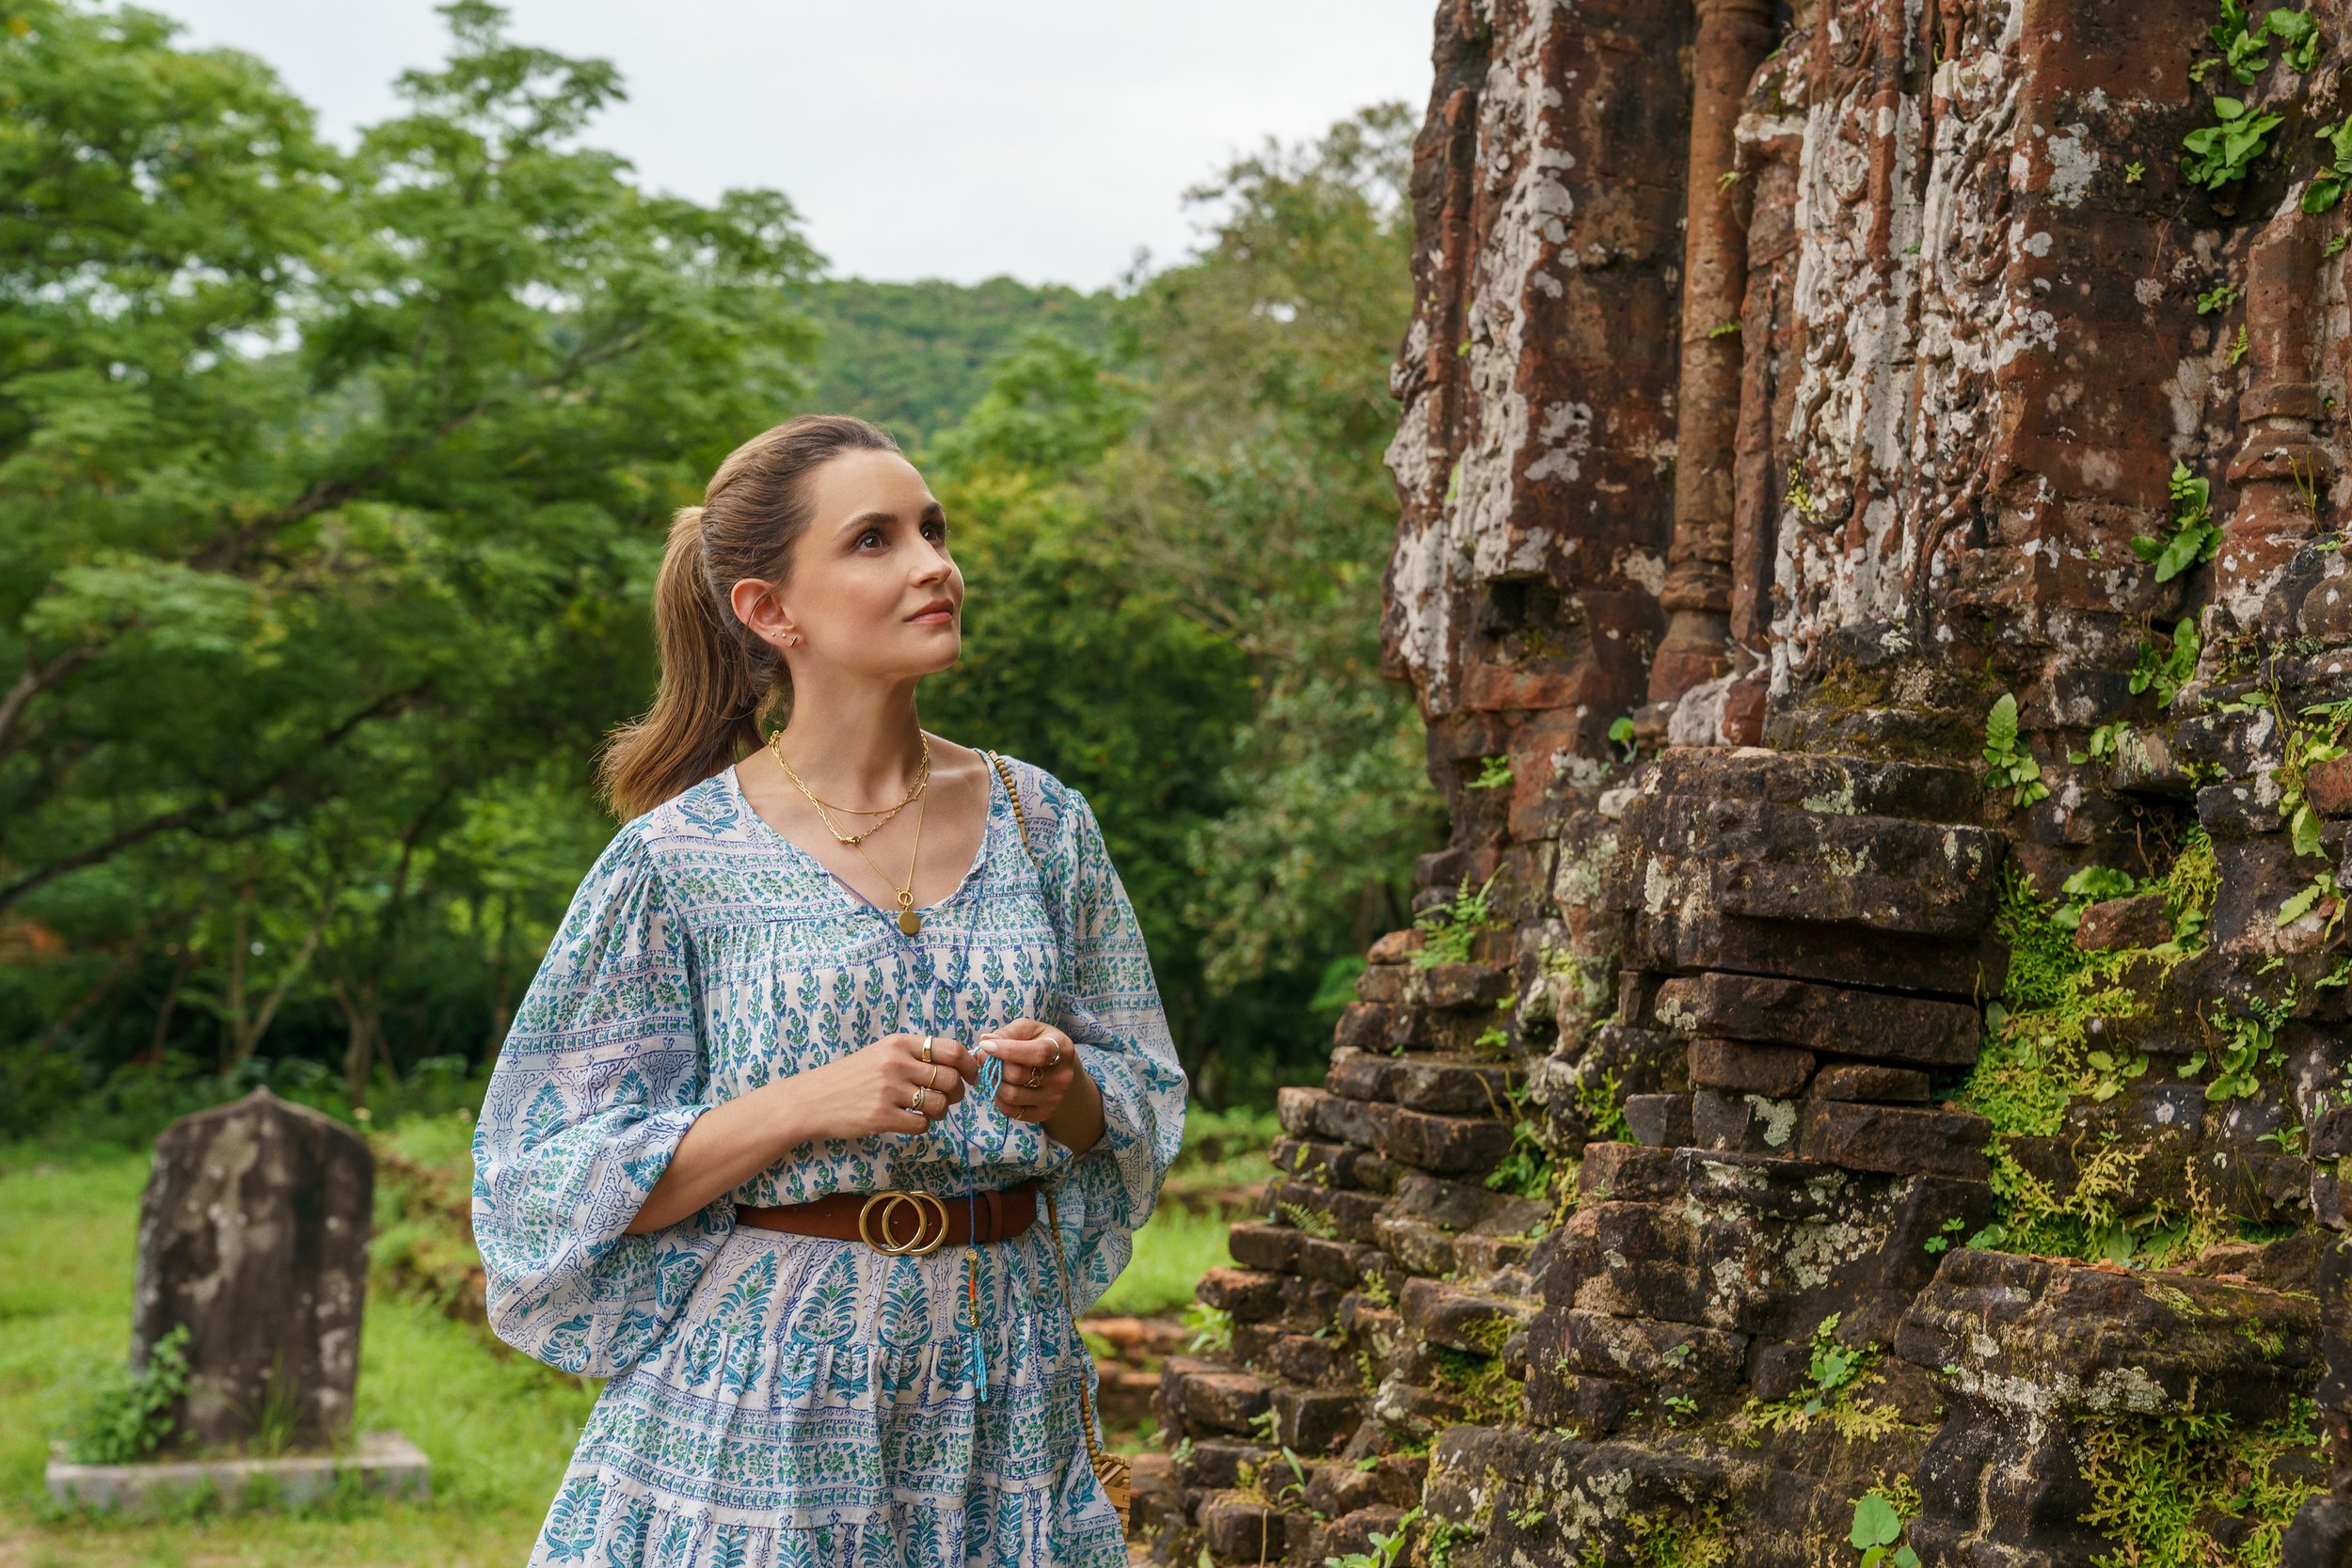  A Tourist's Guide to Love. Rachael Leigh Cook as Amanda in A Tourist's Guide to Love. Cr. Sasidis Sasisakulporn/Netflix © 2022 